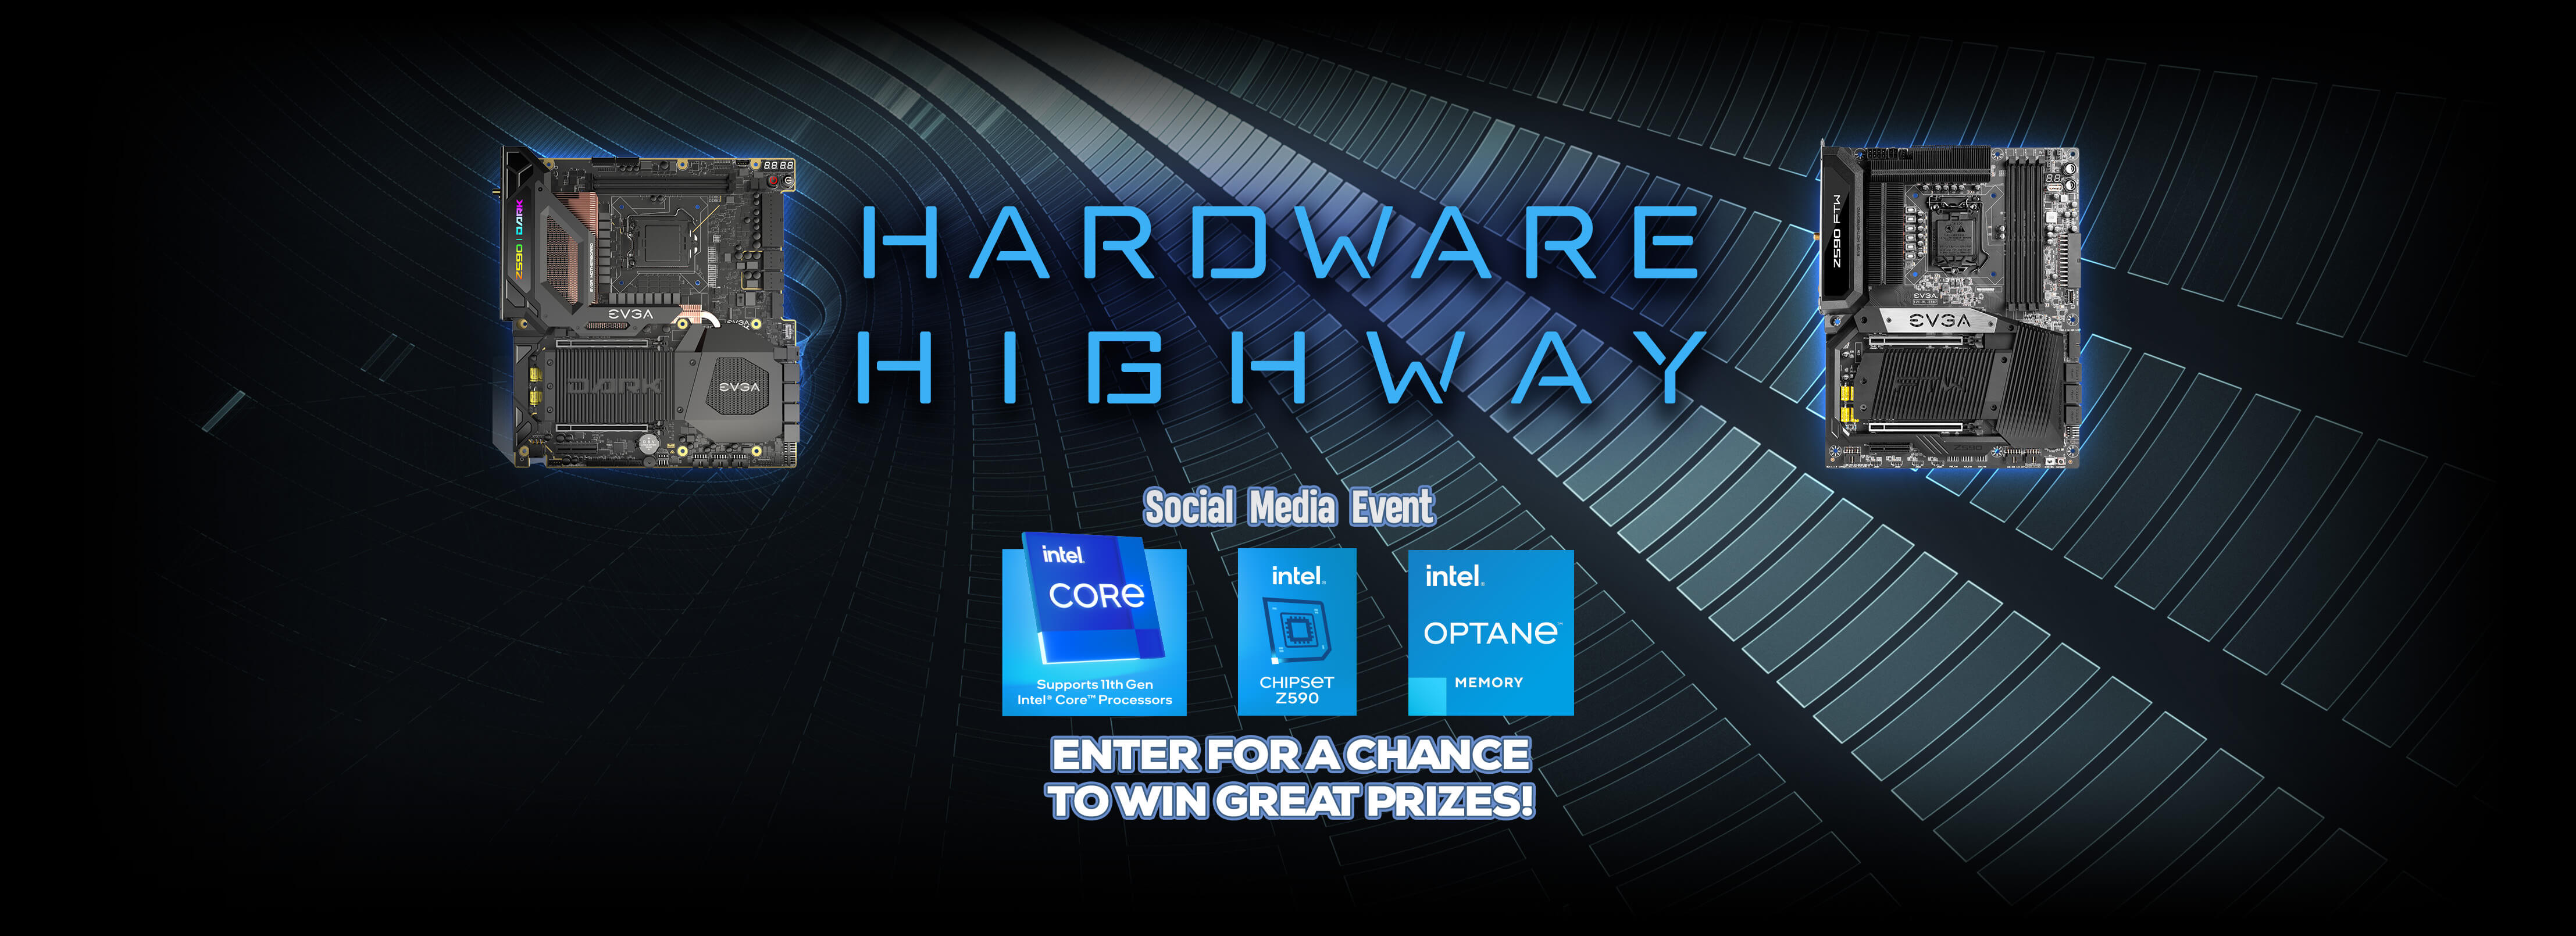 Hardware Highway Social Media Event